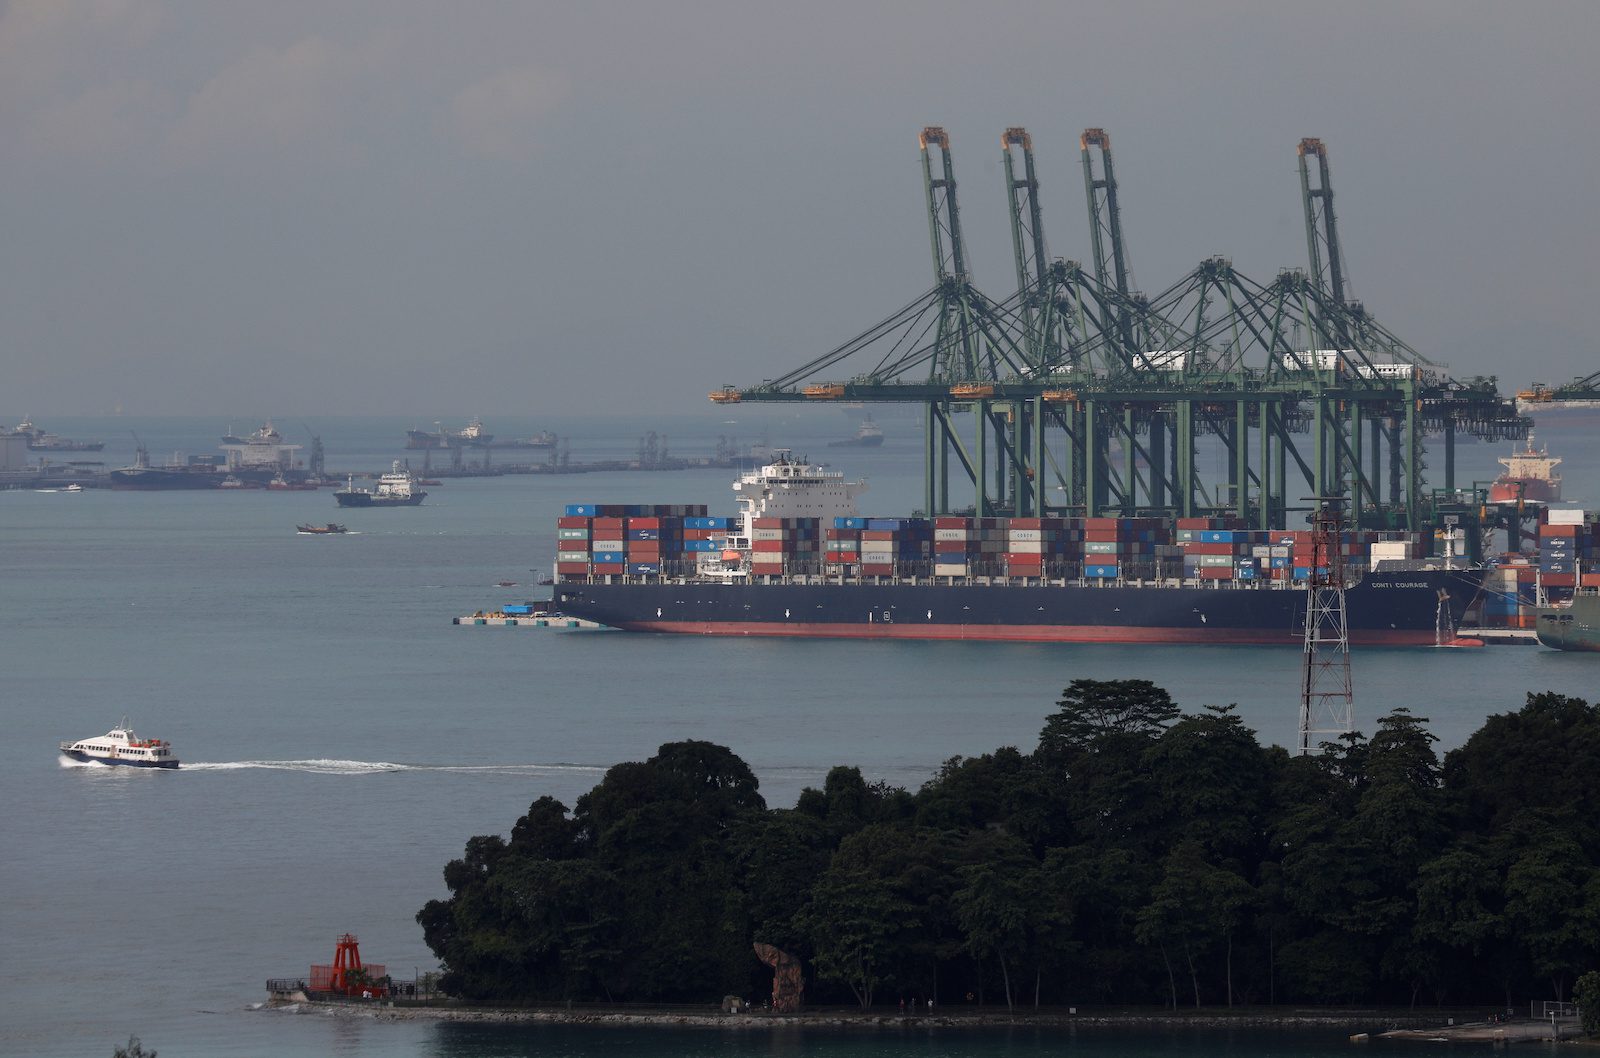 Singapore Port Authority Backs Ammonia Fuel Project